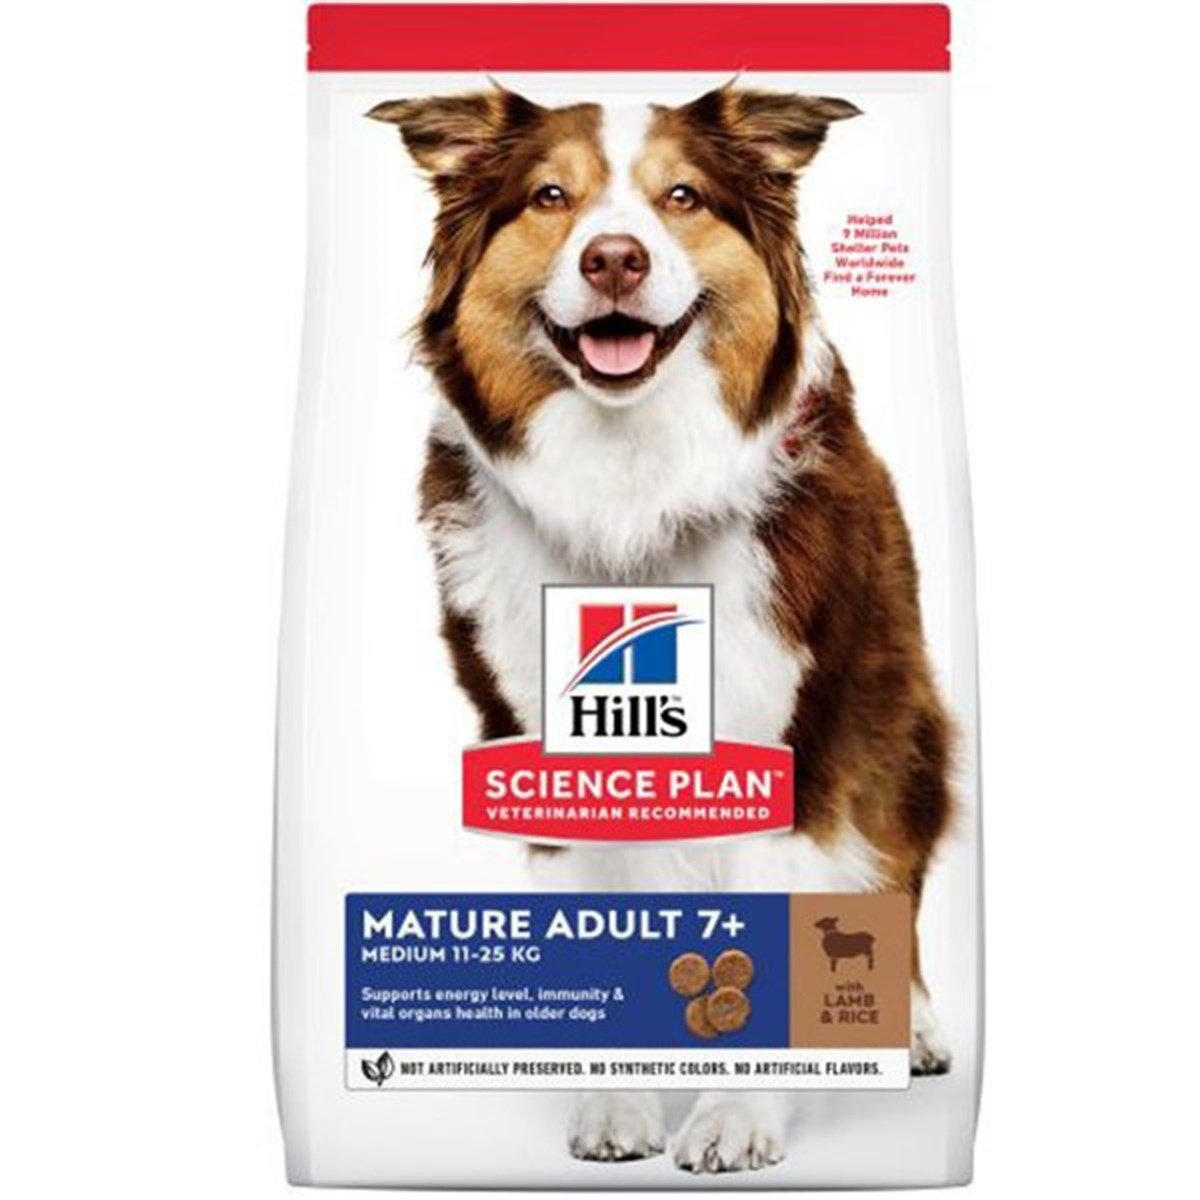 Hills Mature Senior +7 Medium Orta Irk Kuzu Etli Yaşlı Köpek Mamasi 2.5 Kg  | Shopiglo